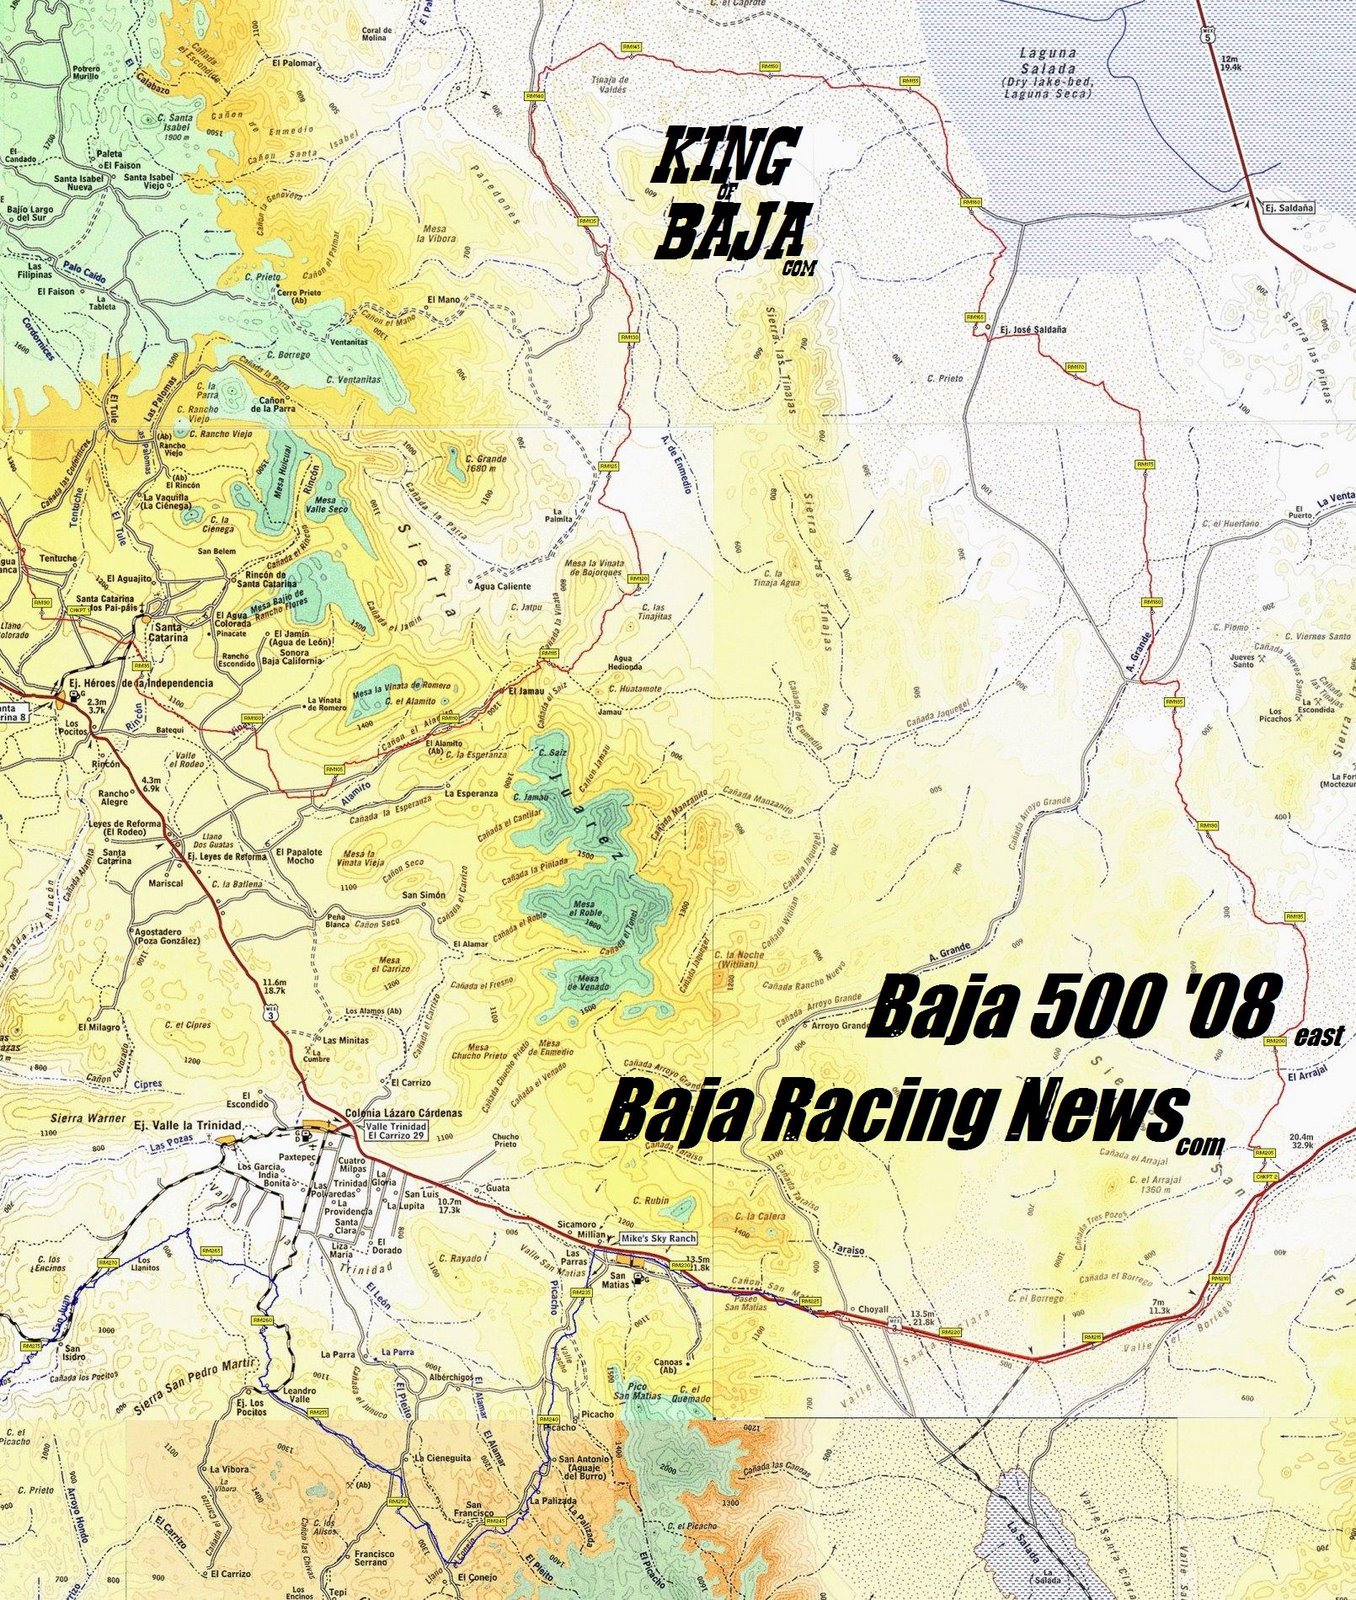 [baja+racing+news+.com+baja+500+2008+map+detail+east.jpg]